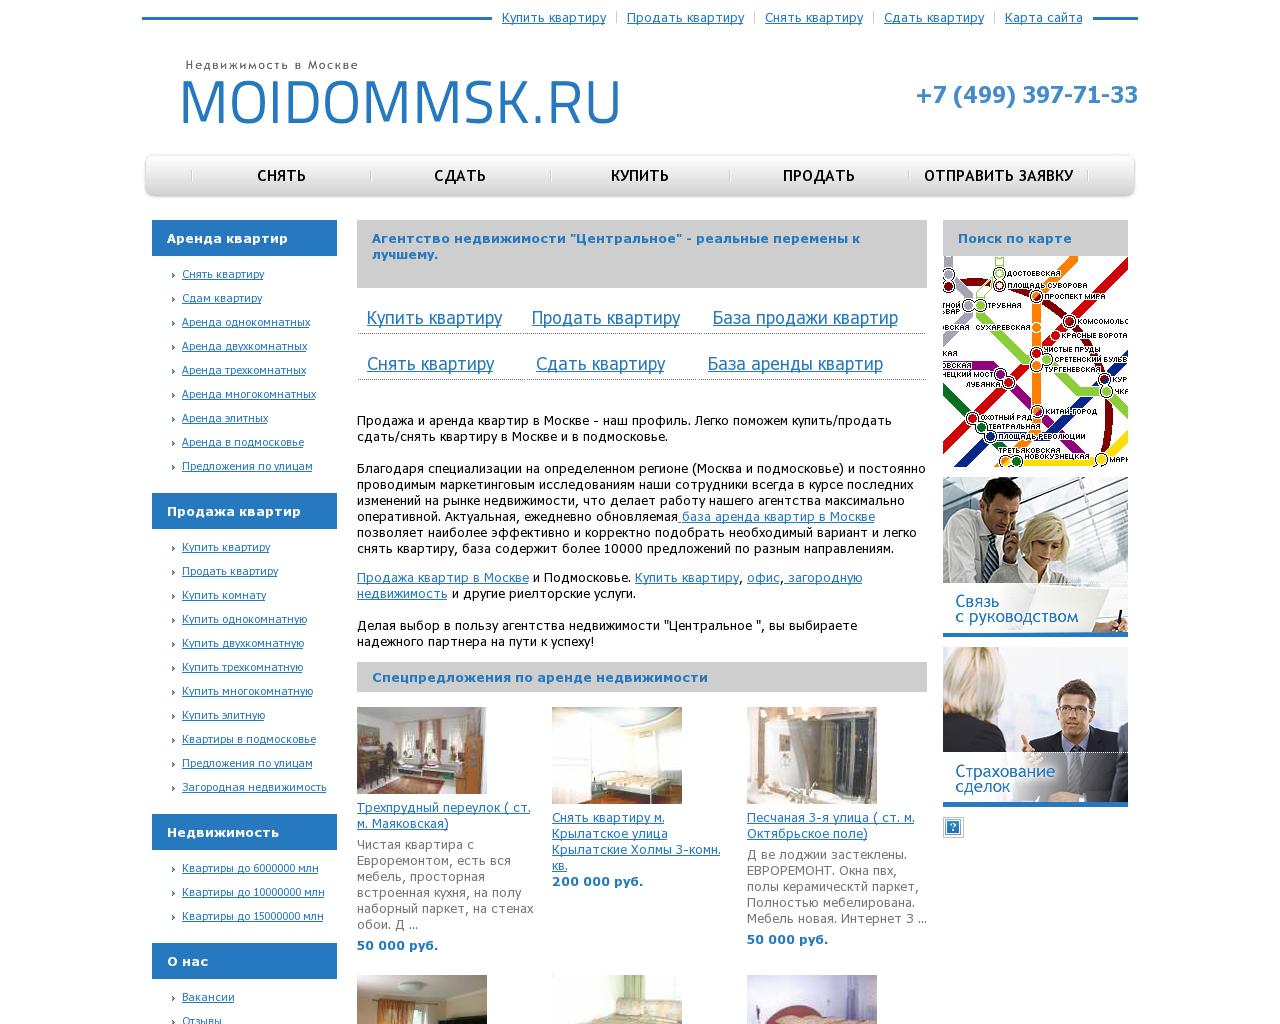 Изображение сайта moidommsk.ru в разрешении 1280x1024